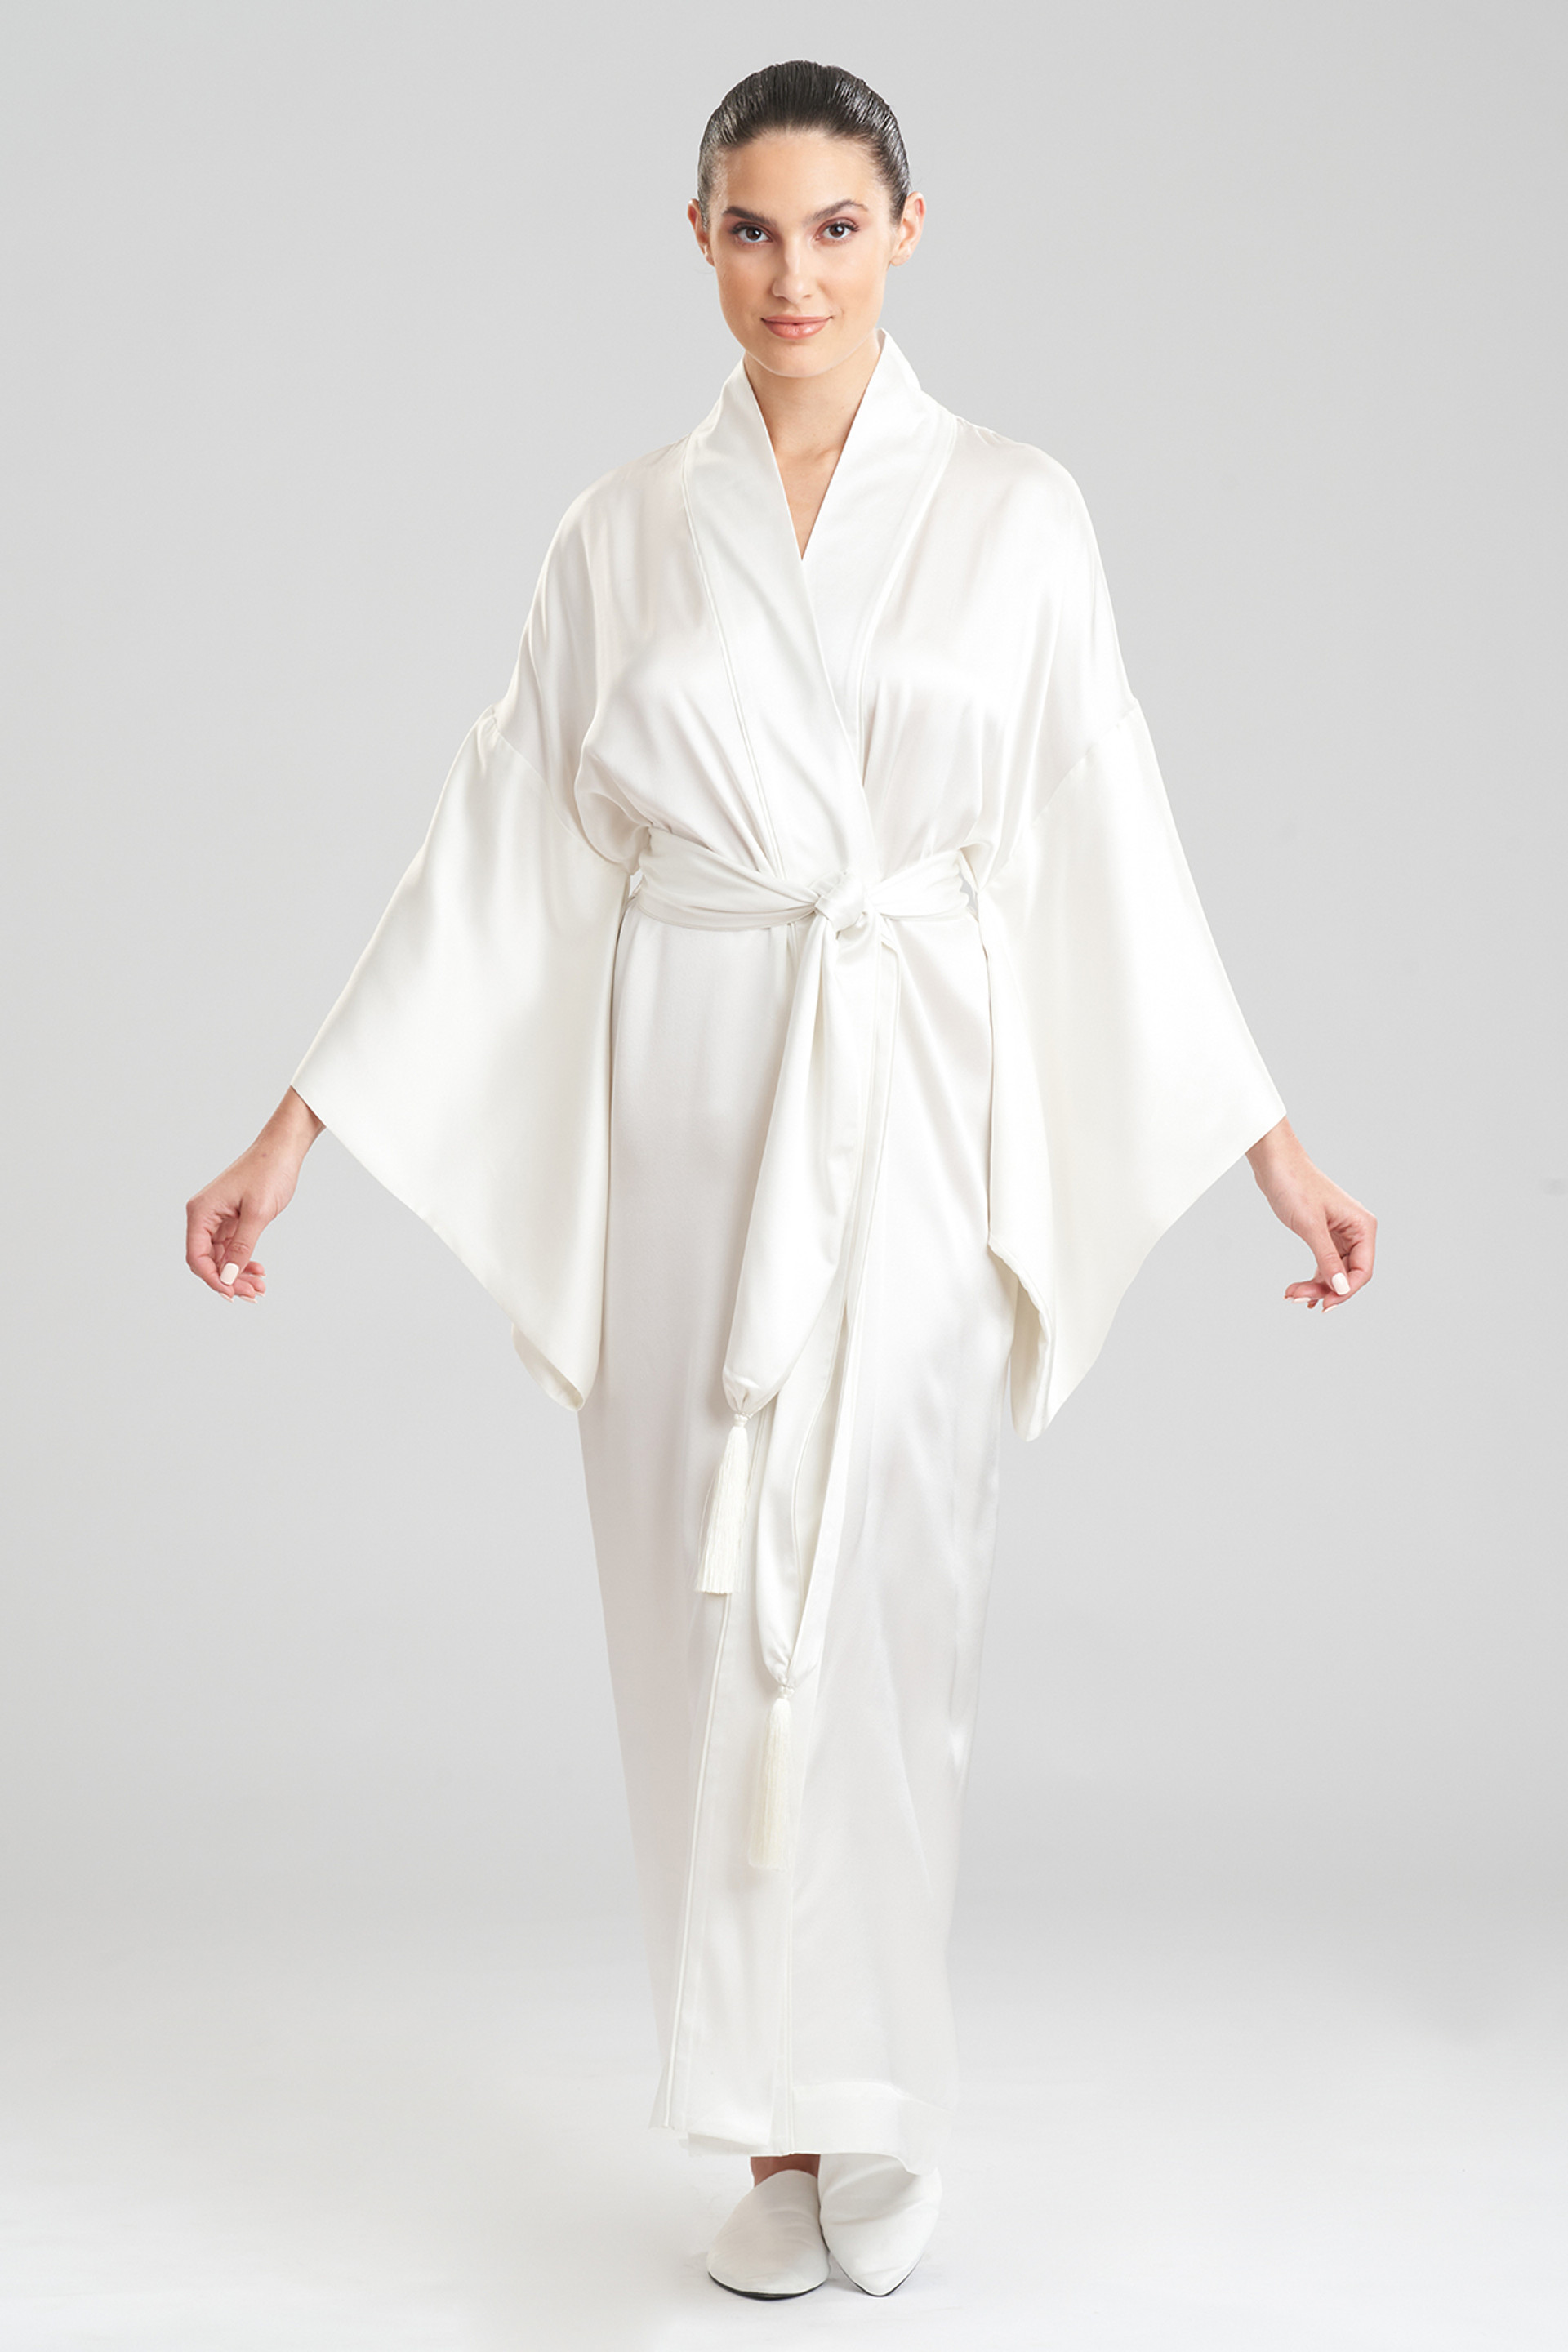 Key EssentialsSilk Kimono Robe